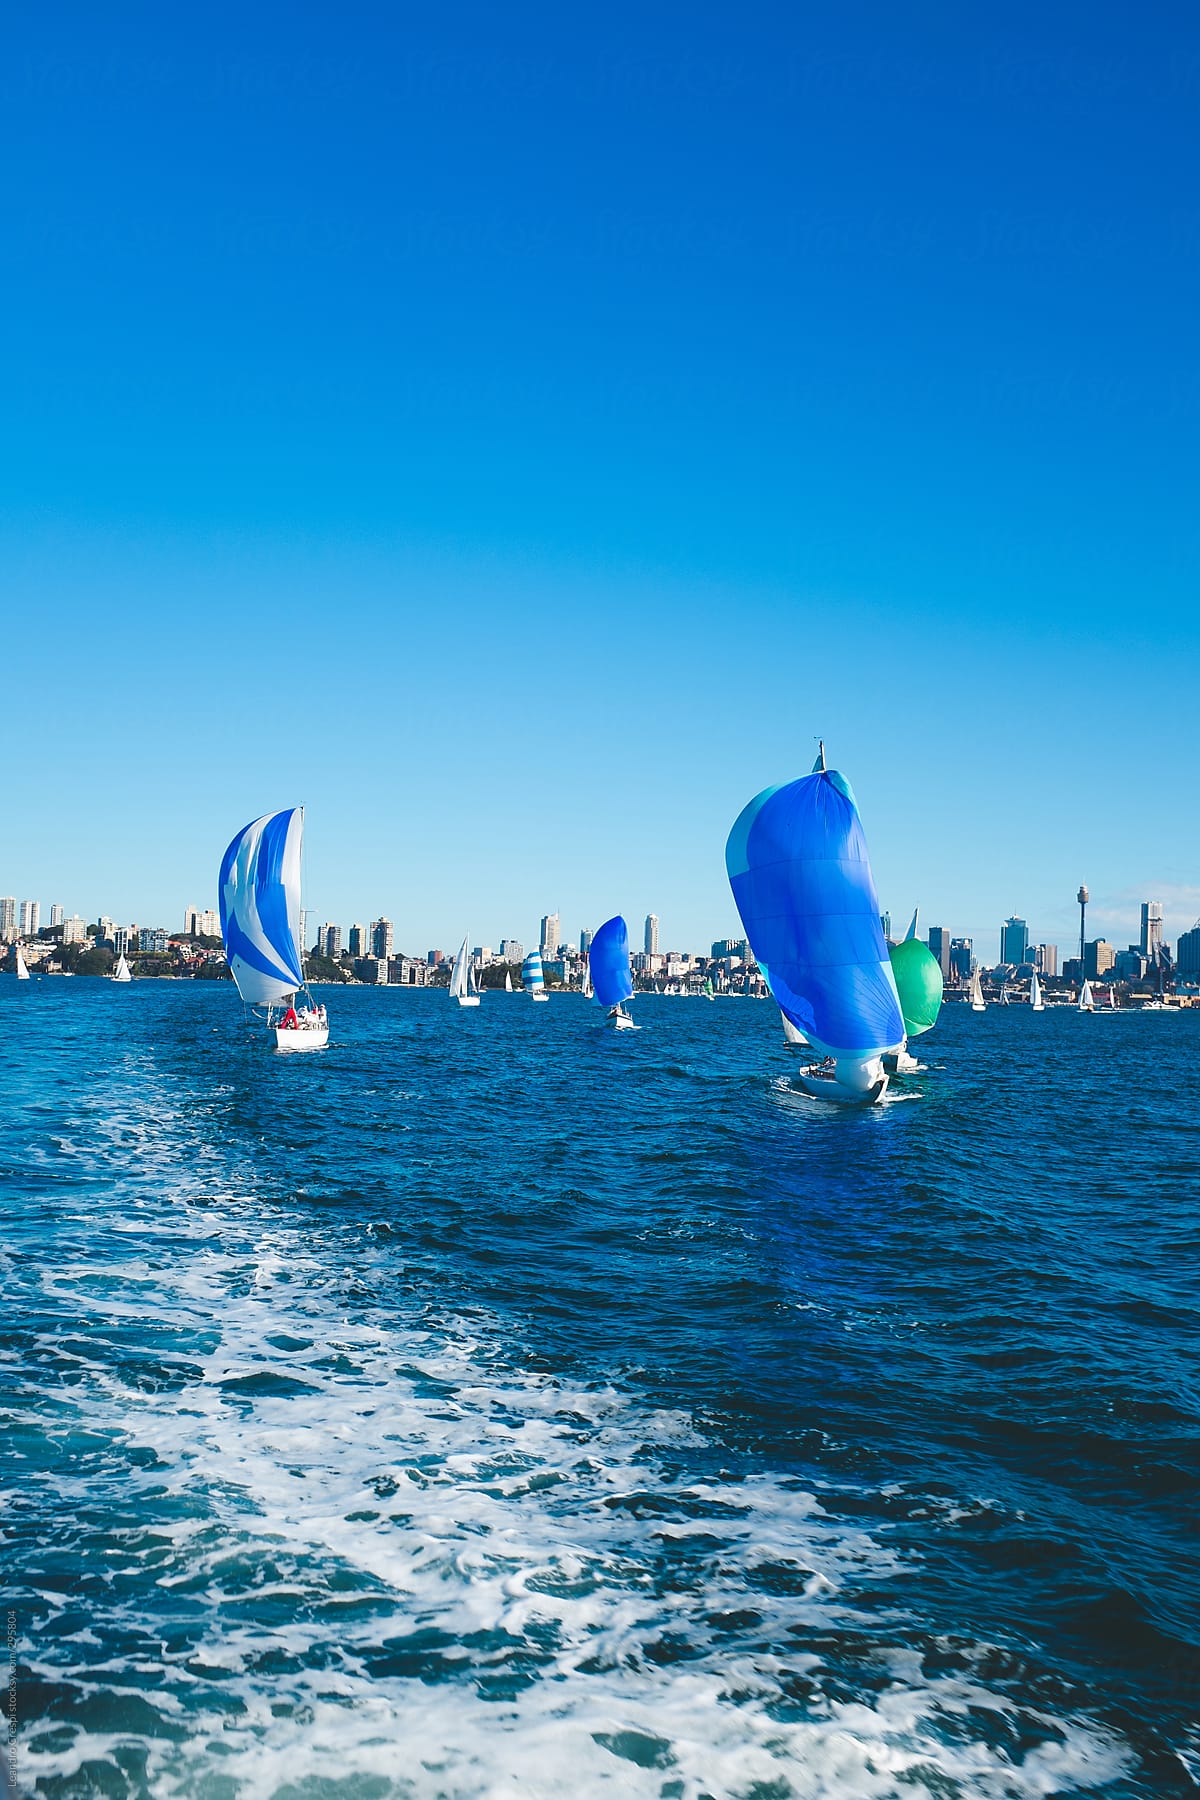 "Sydney Sailboat Regatta" by Stocksy Contributor "Ohlamour Studio